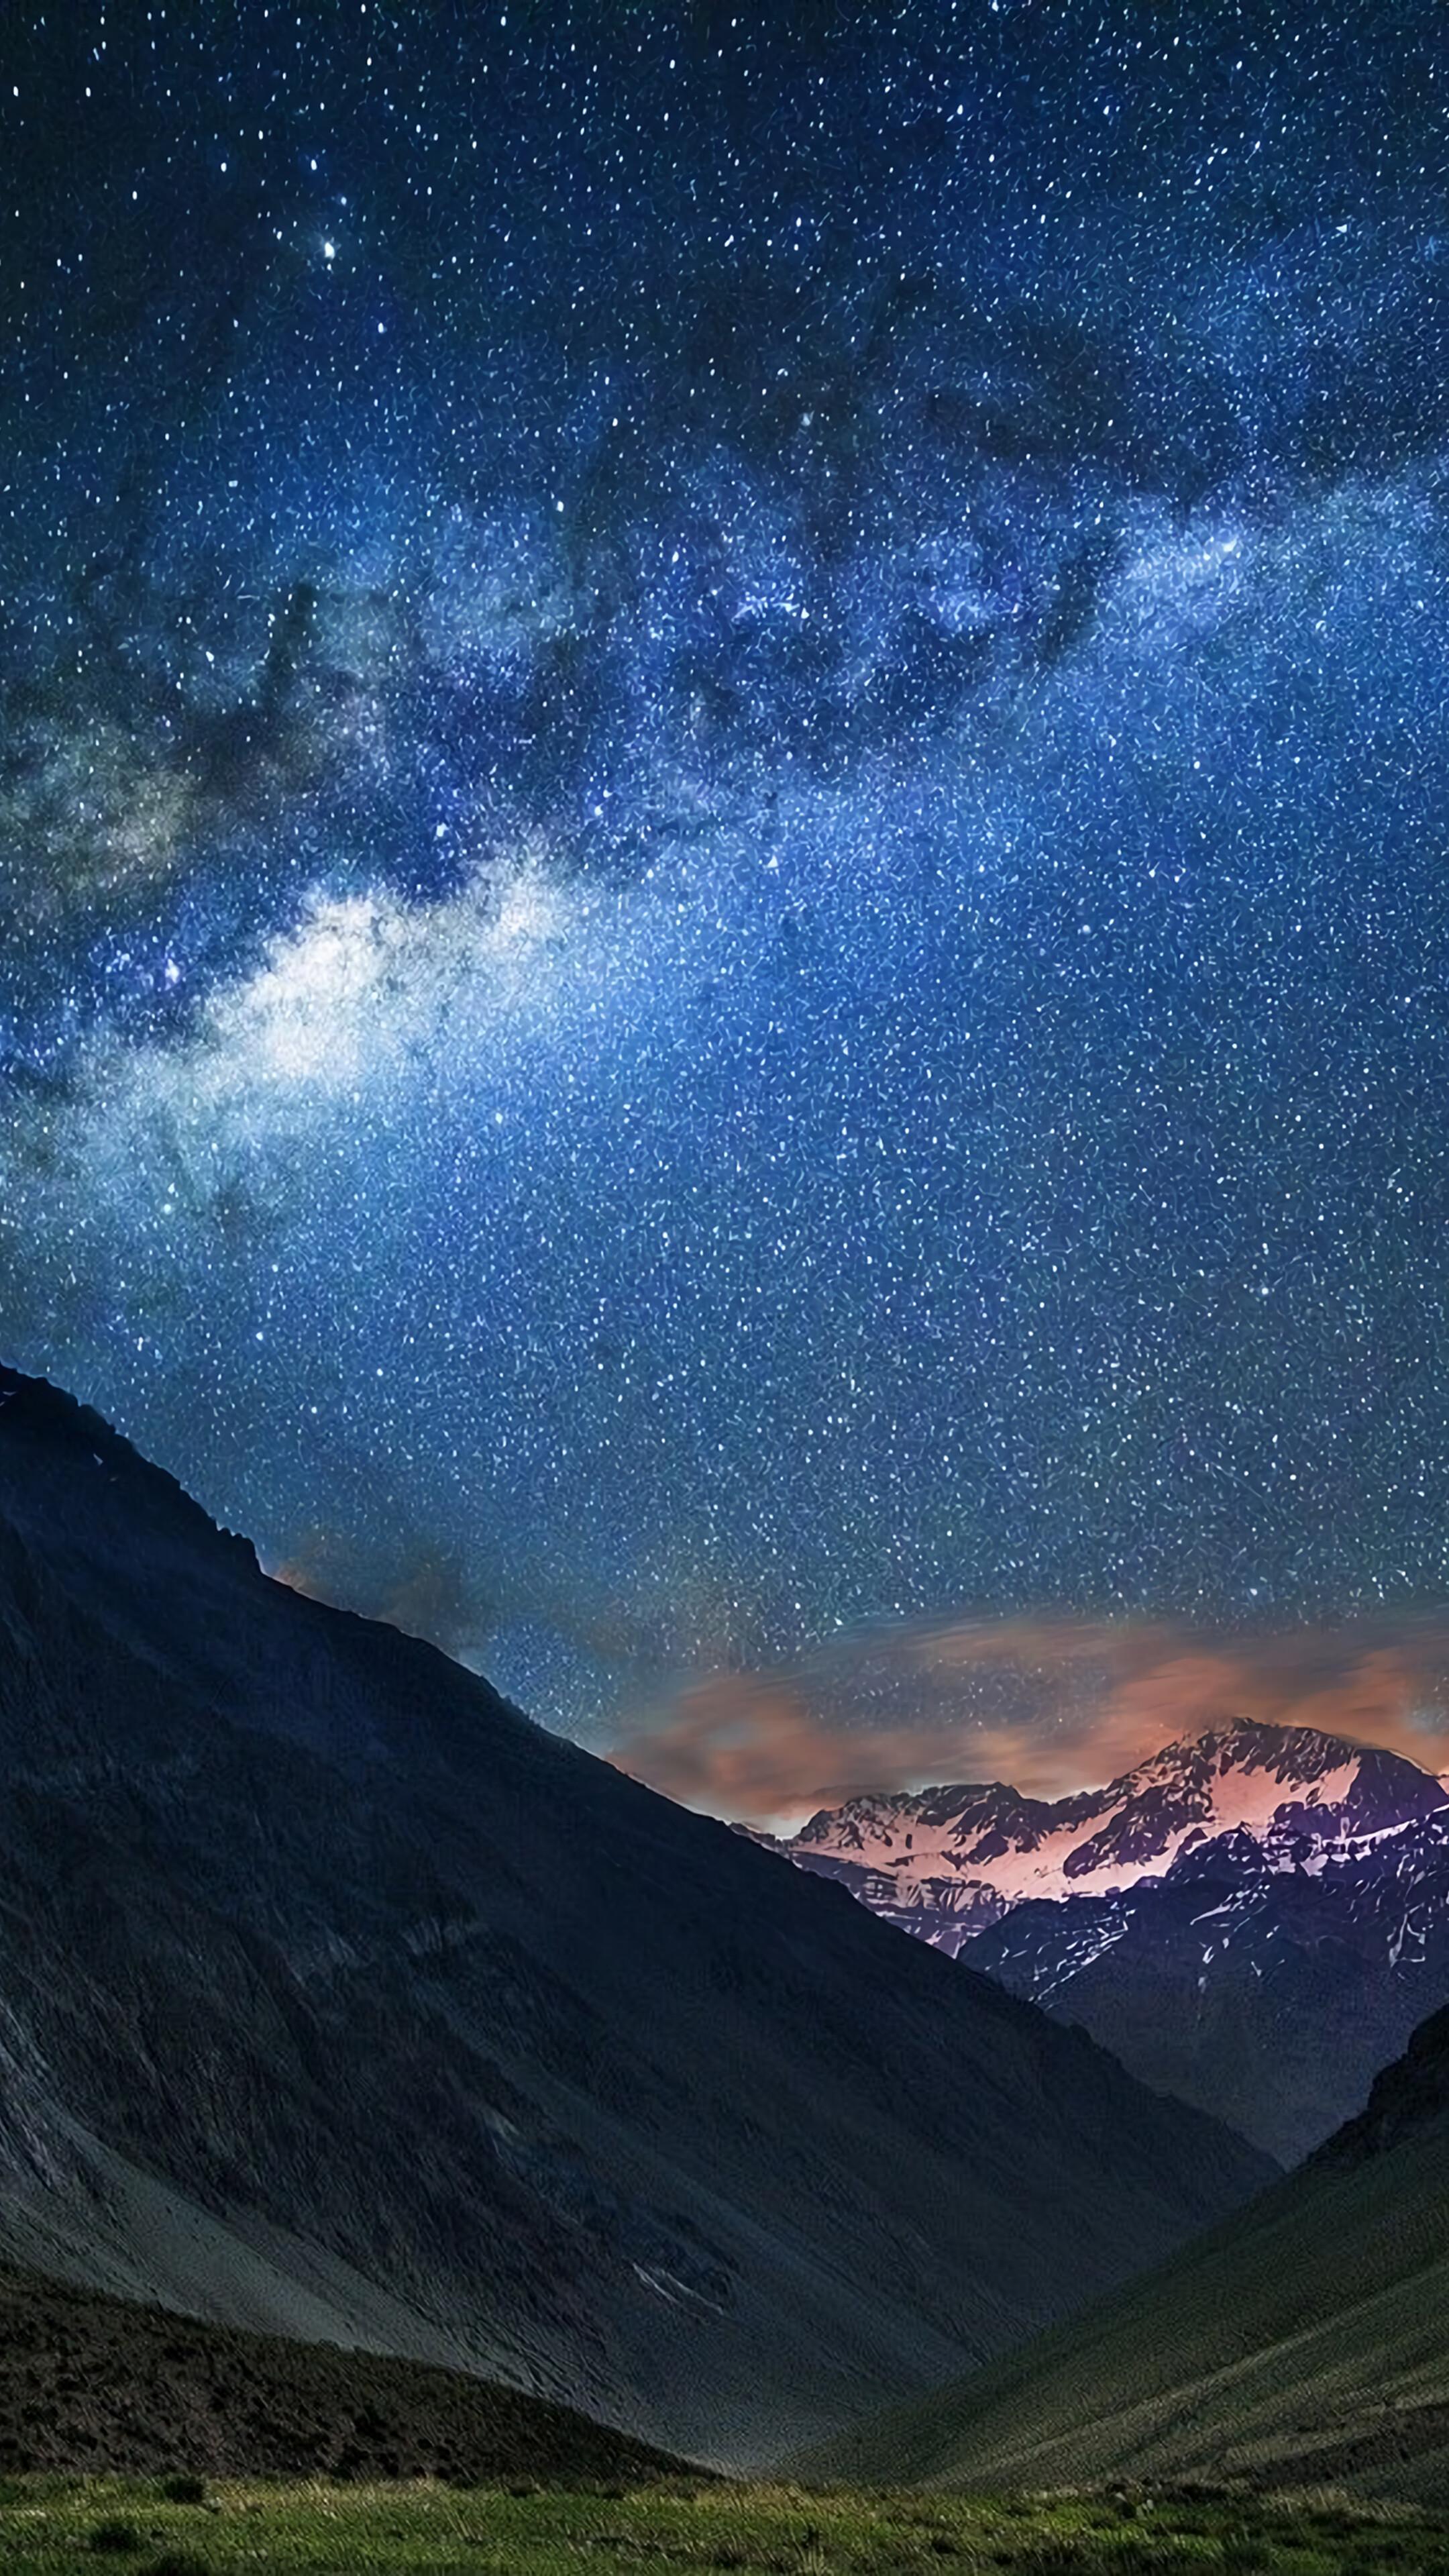 327313 Mountain Landscape Night Sky Stars Milky Way Scenery